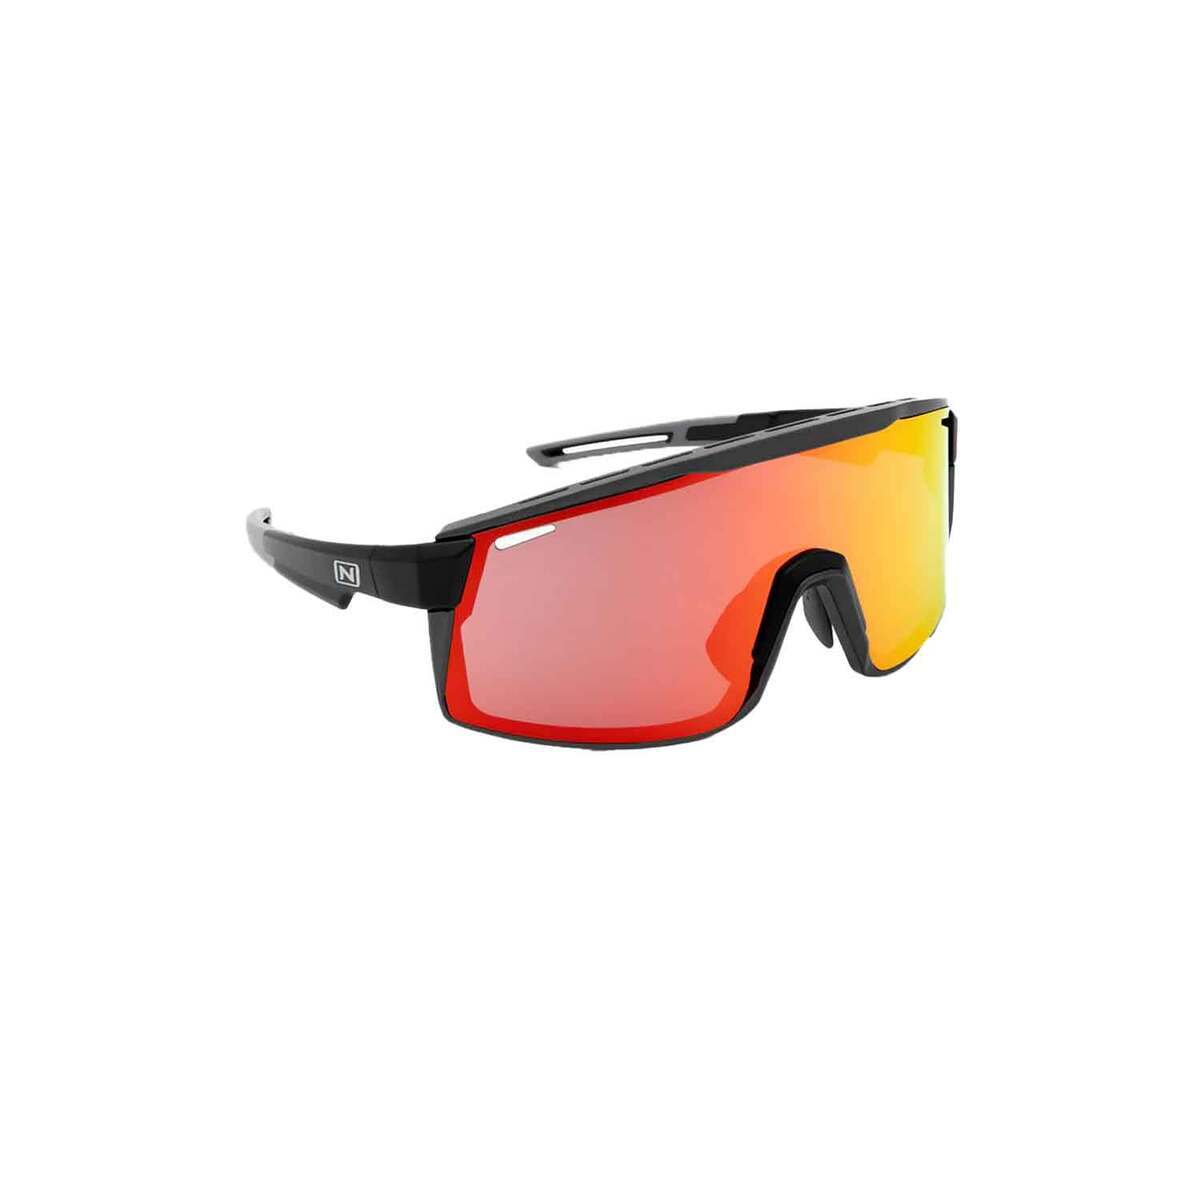 https://www.sportsmans.com/medias/optic-nerve-fixiemax-mirrored-polarized-sunglasses-aluminumorange-1808295-1.jpg?context=bWFzdGVyfGltYWdlc3wyMzc5MnxpbWFnZS9qcGVnfGFHWmhMMmc1T0M4eE1USXpOREEwTkRnek56a3hPQzh4T0RBNE1qazFMVEZmWW1GelpTMWpiMjUyWlhKemFXOXVSbTl5YldGMFh6RXlNREF0WTI5dWRtVnljMmx2YmtadmNtMWhkQXw5NmM4Y2EzYzk1YTIyYmNhYzRhNGFmOGE4OGY2NjFlYjQ4ZDlhNTJjZjE3YTE1MzMzYWM1MDZkYjQyZDJjM2Uy